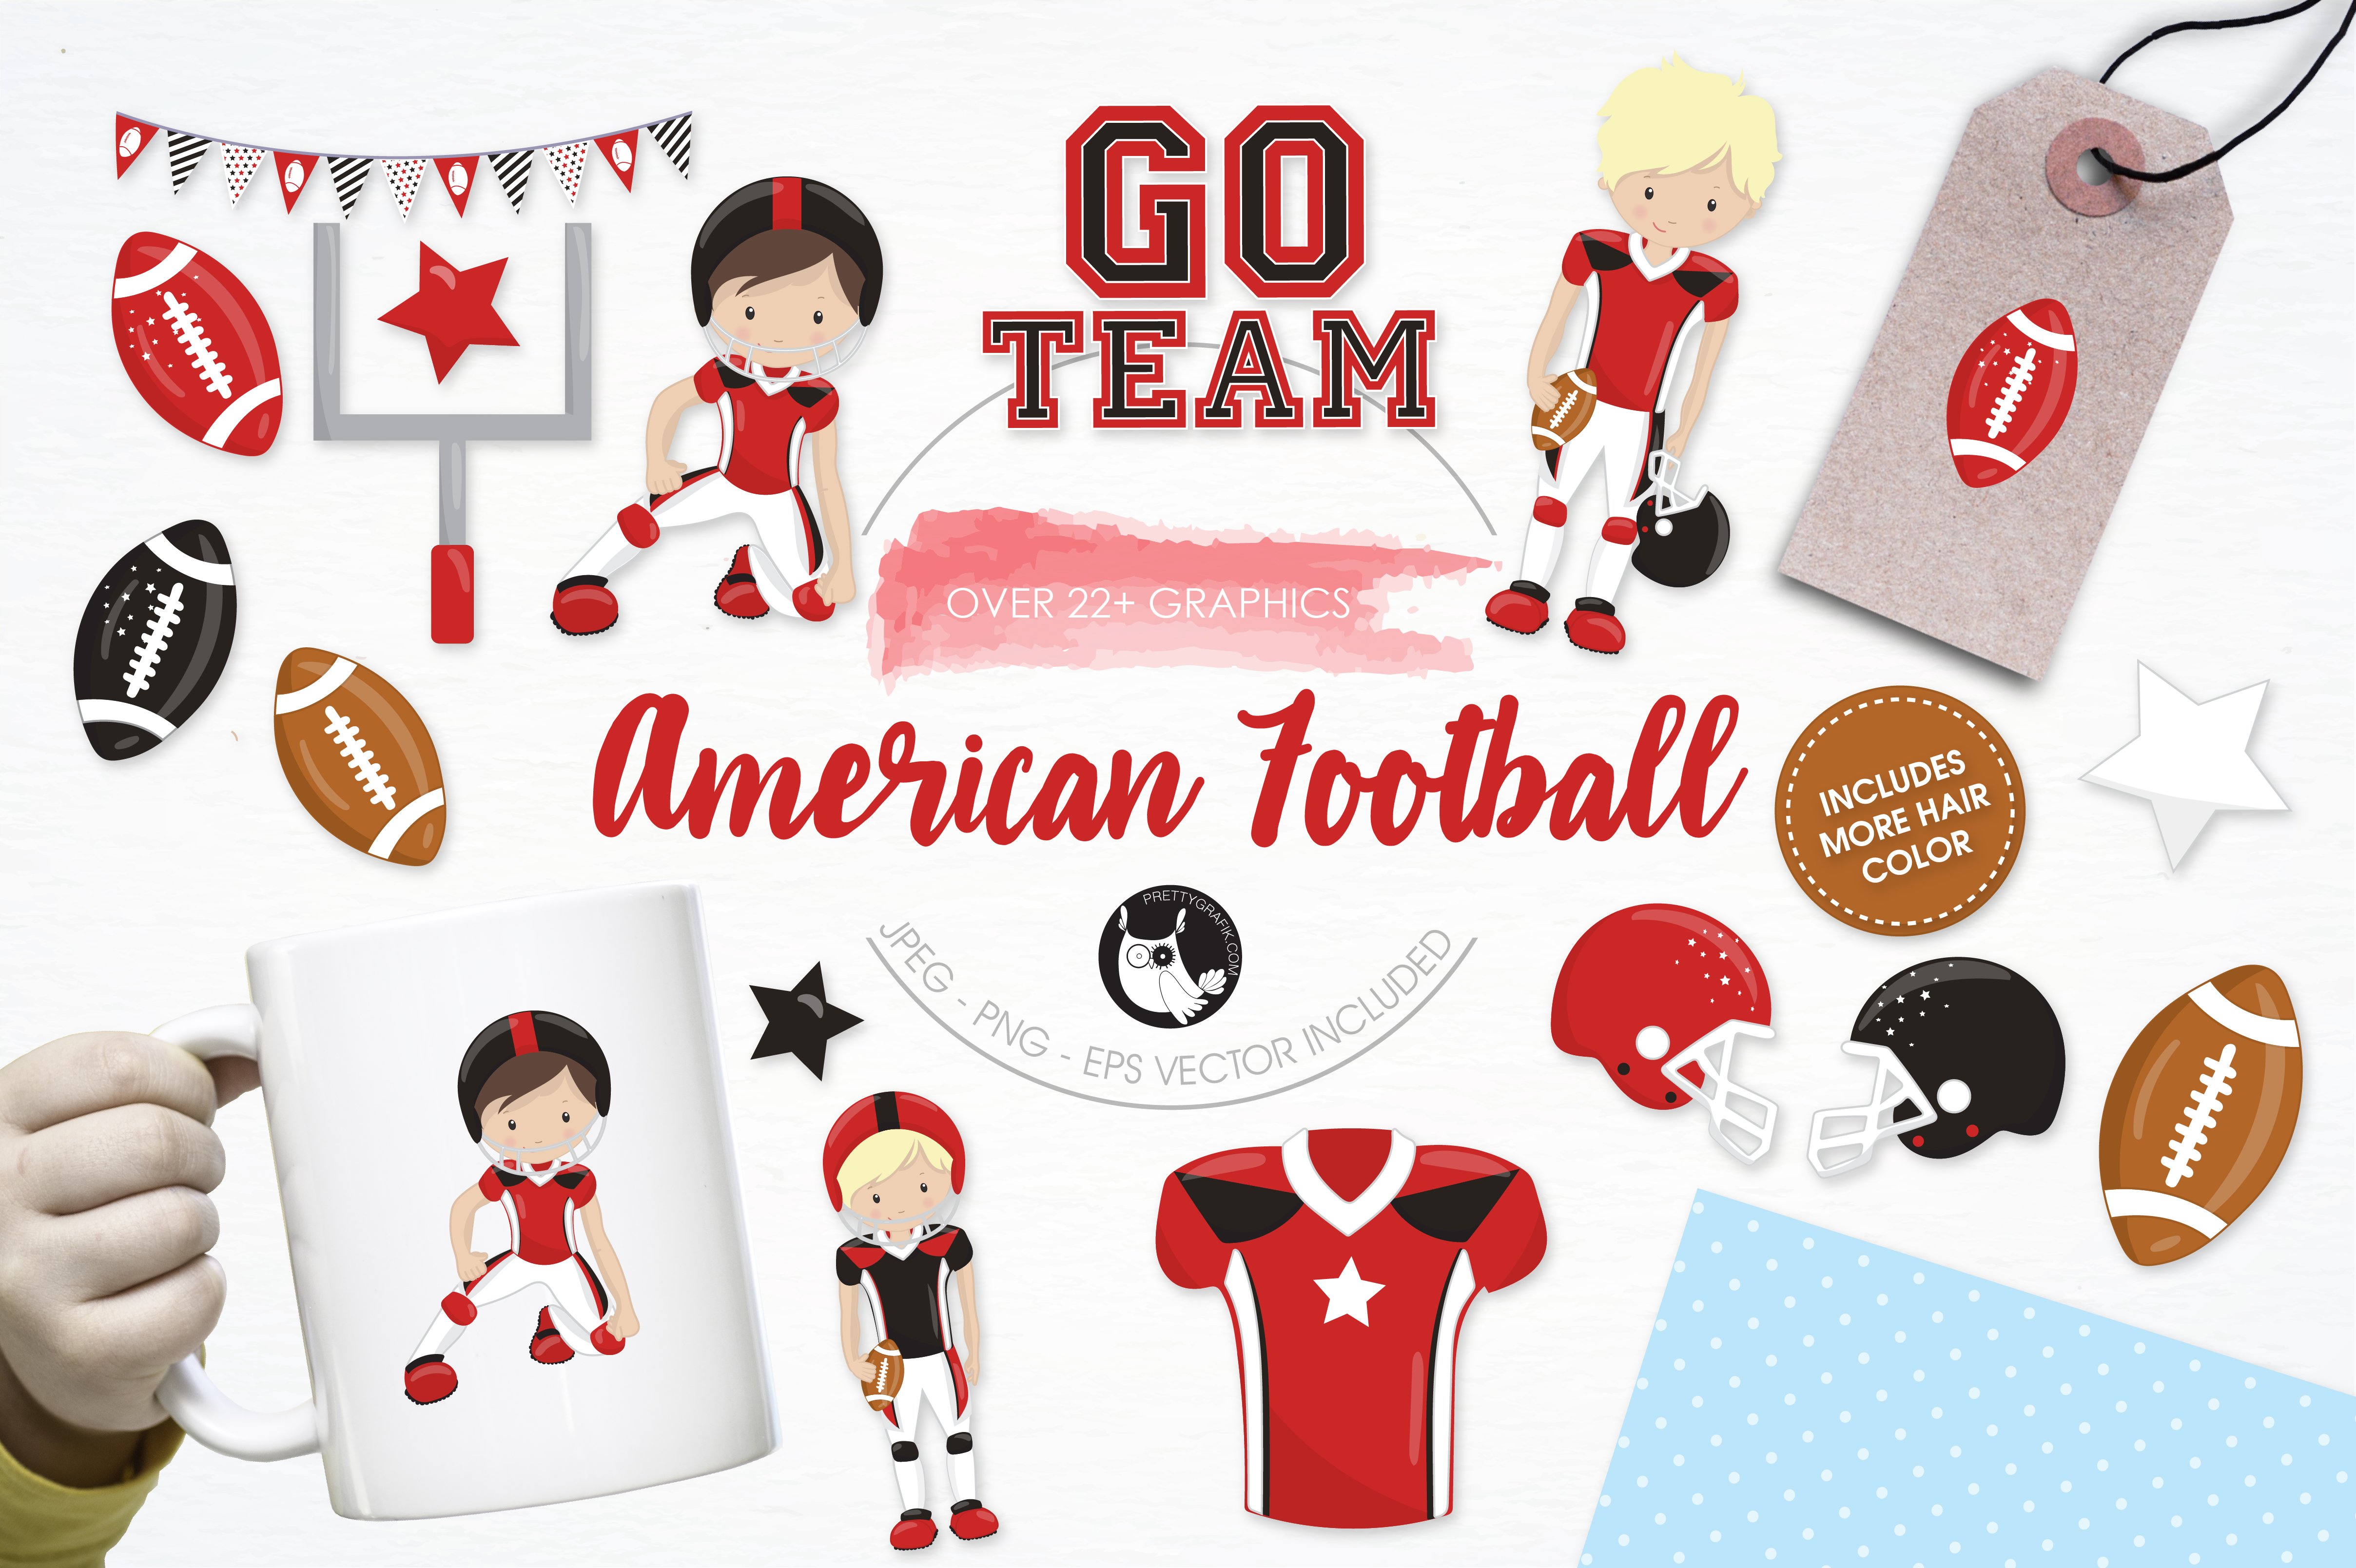 American football illustration pack - Vector Image